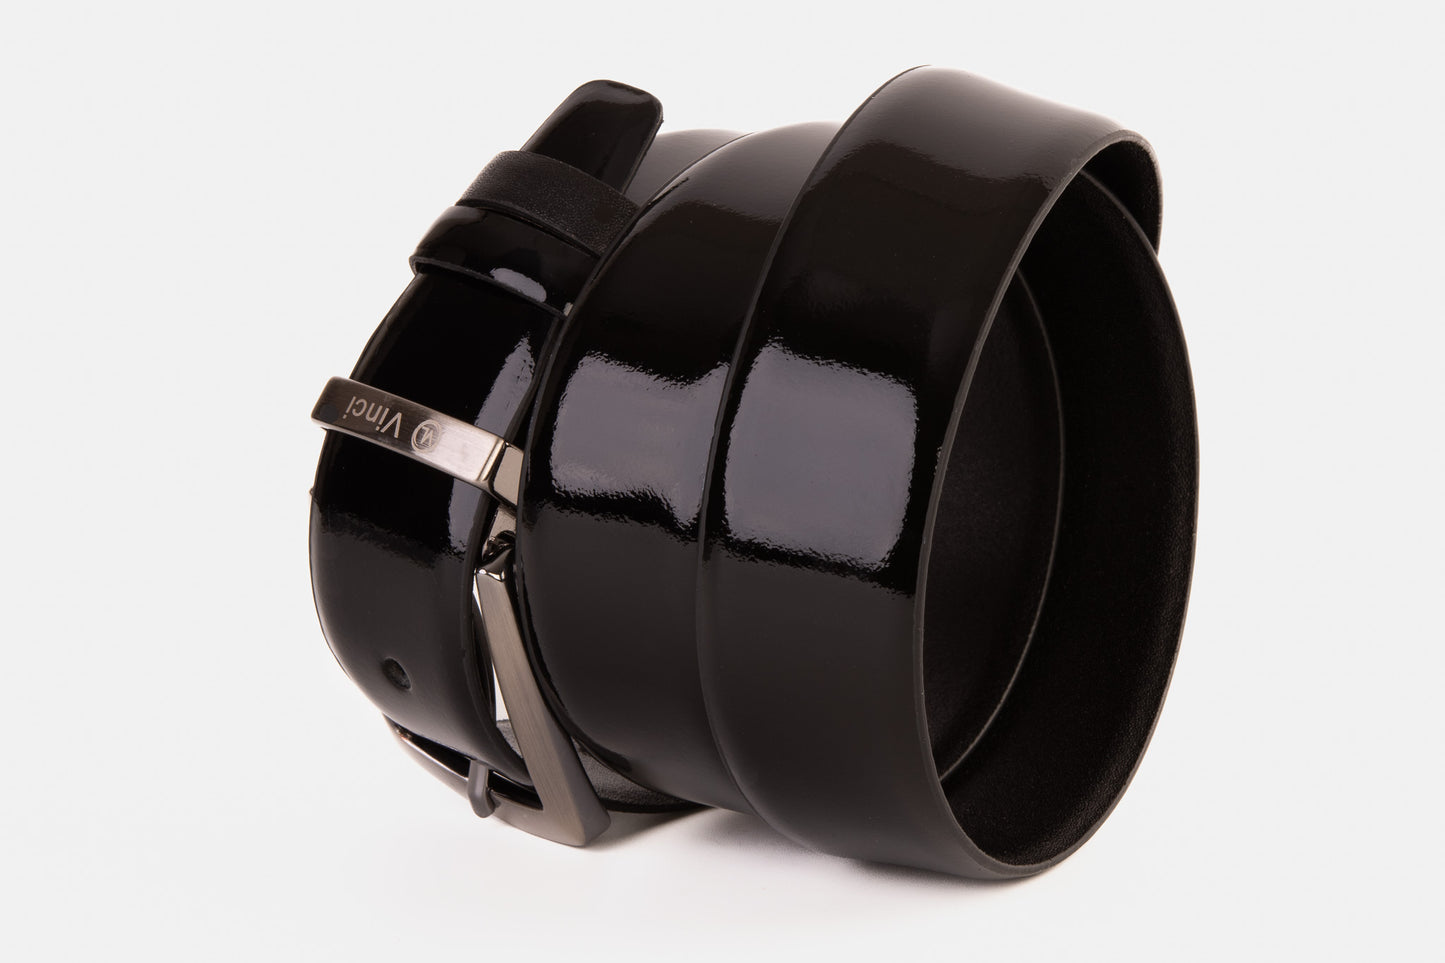 The Sun Reversible Black Patent Leather Belt